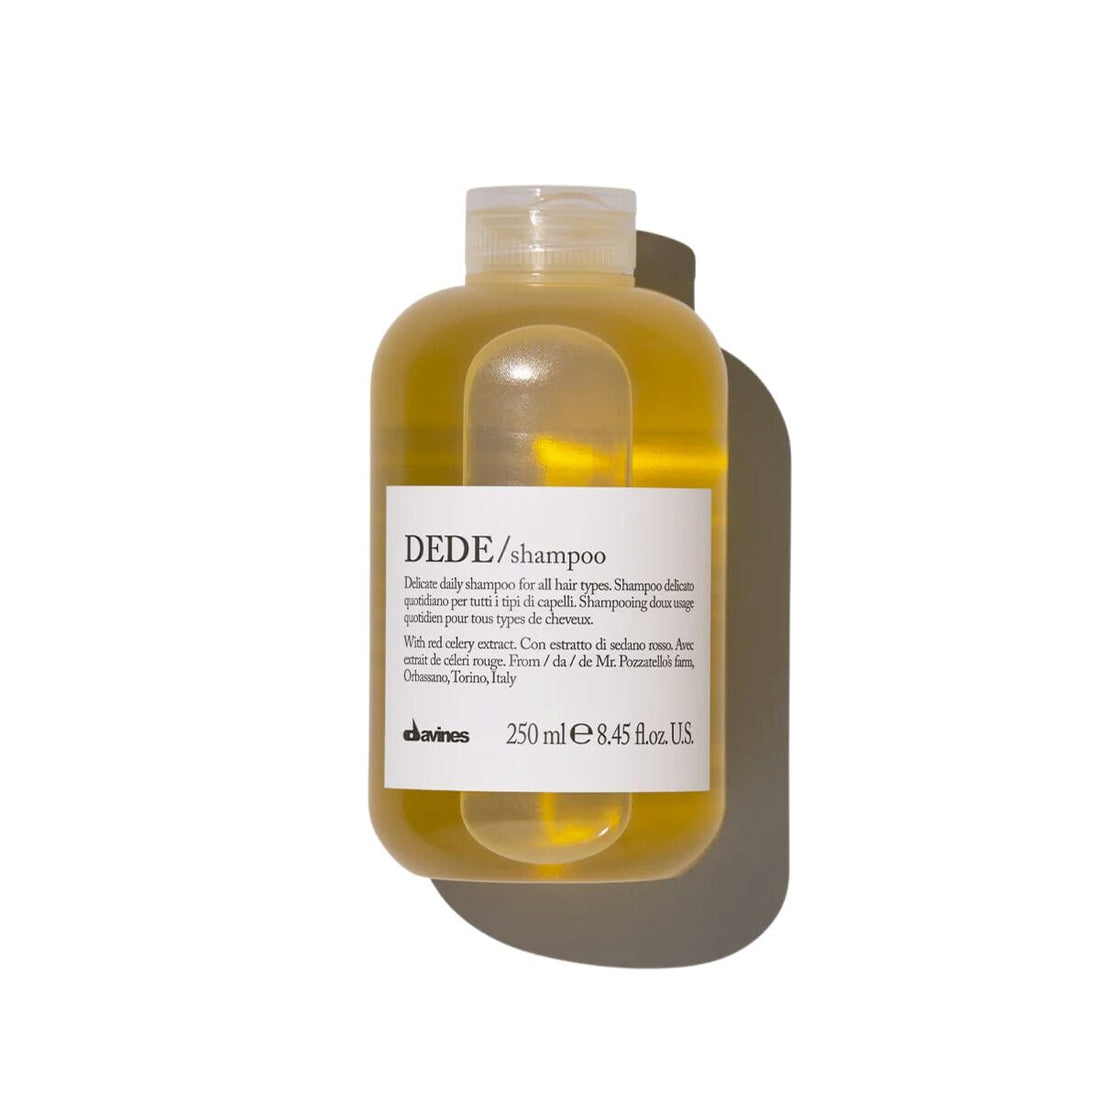 Davines DEDE Shampoo: Delicate Daily Shampoo for All Hair Types 250ml - HairMNL